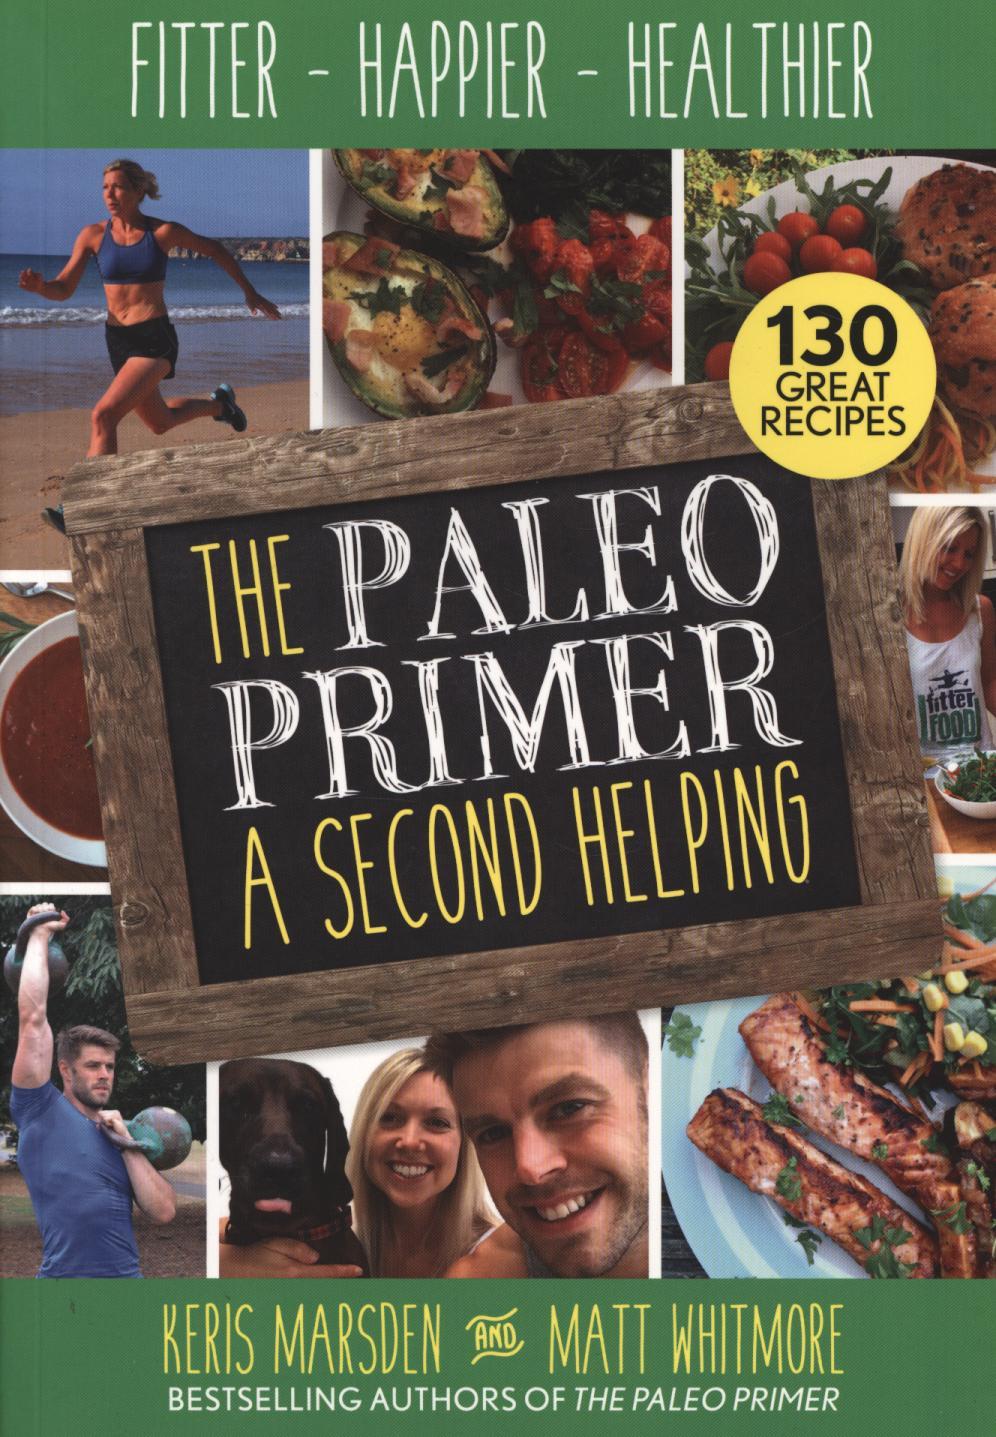 Paleo Primer (A Second Helping) - Keris Marsden